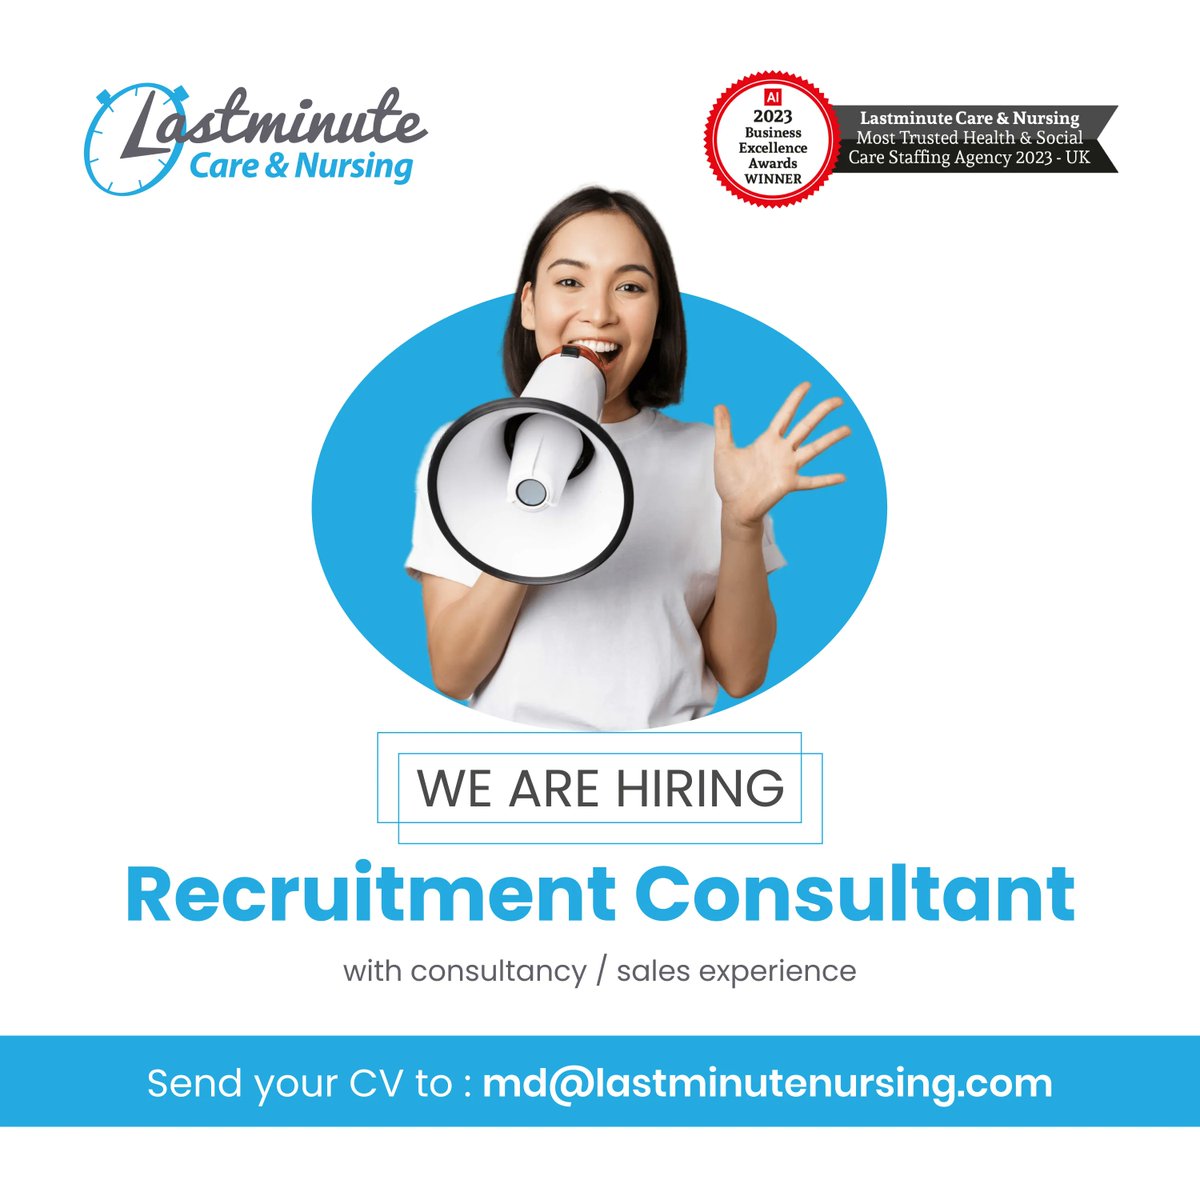 #recruitments #recruitment #recruitmenttips #recruitmentready #humanresources #recruitmentagency #staffingagency #recruitmentmarketing #recruiter #staffing #recruitmentjob #recruitmentsolutions #recruiting #recruitmentlife #recruitmentconsultants #hiring #recruitmentconsultant